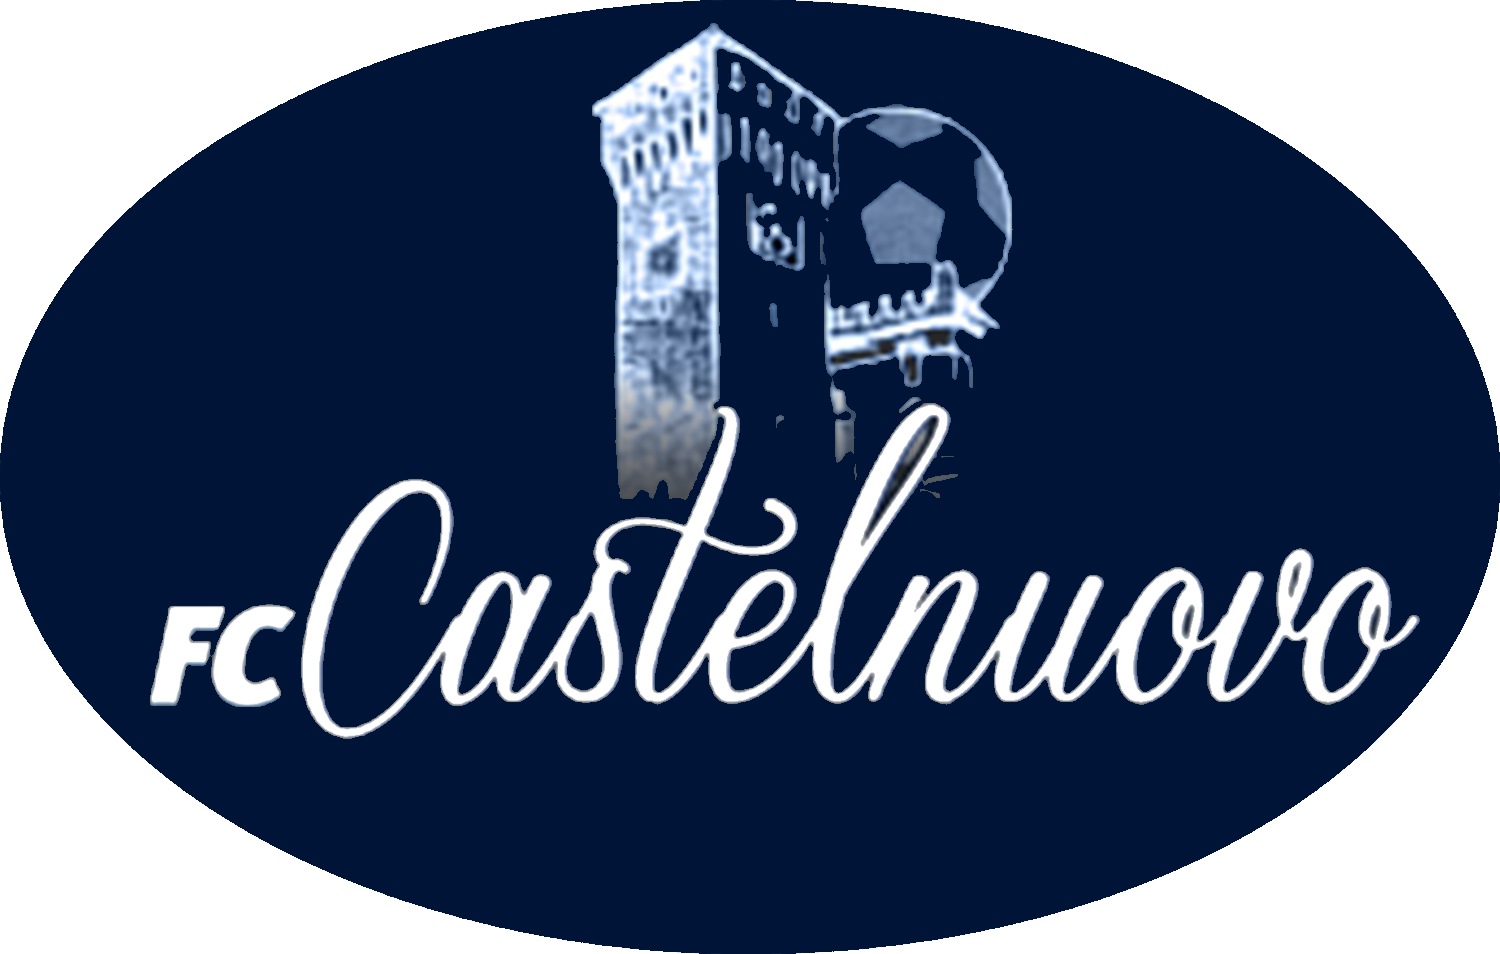 CENTESE v FC CASTELNUOVO